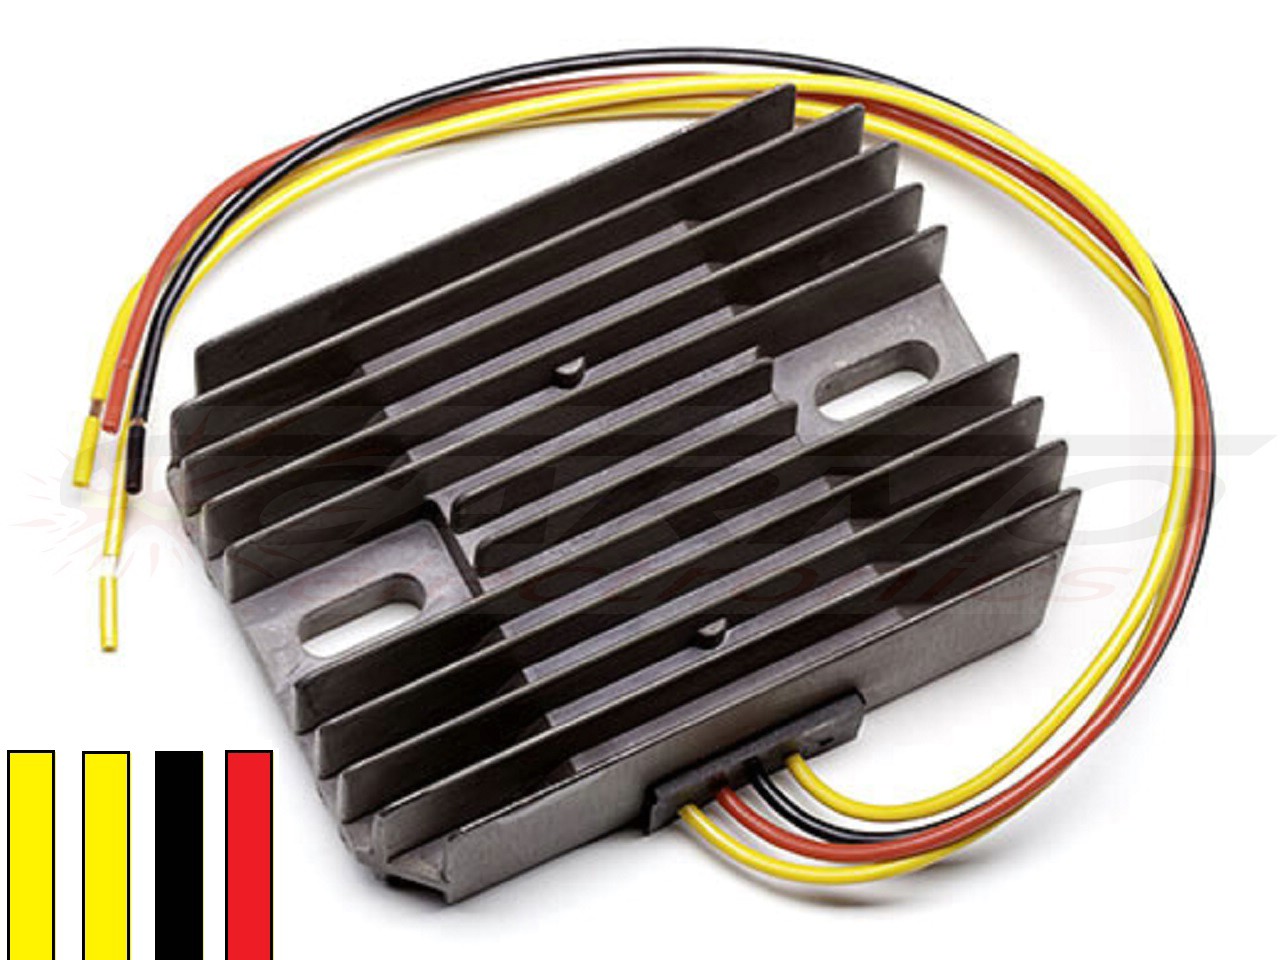 CARR801 Harley MOSFET Voltage regulator rectifier - Clique na Imagem para Fechar